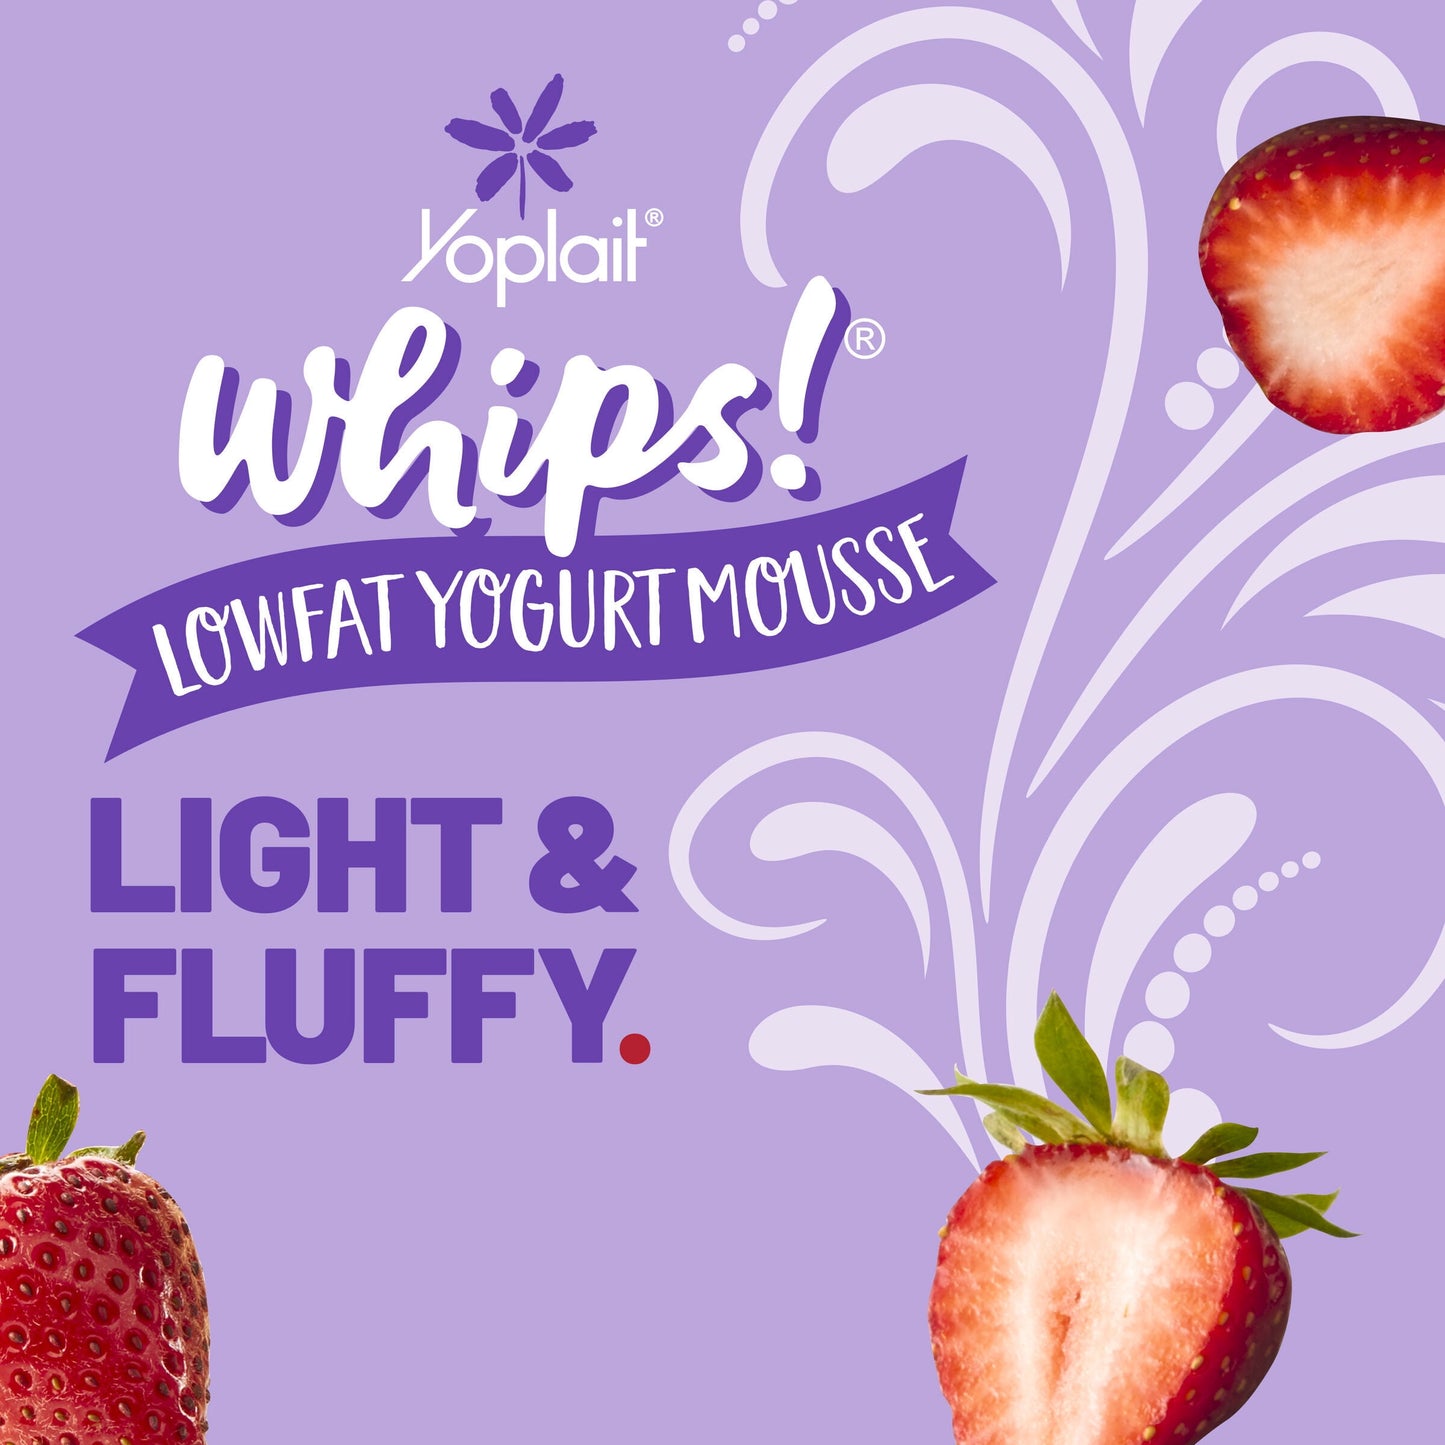 Yoplait Whips Lowfat Yogurt Mousse, Strawberry Mist Flavored Snack, 4 OZ Yogurt Cup